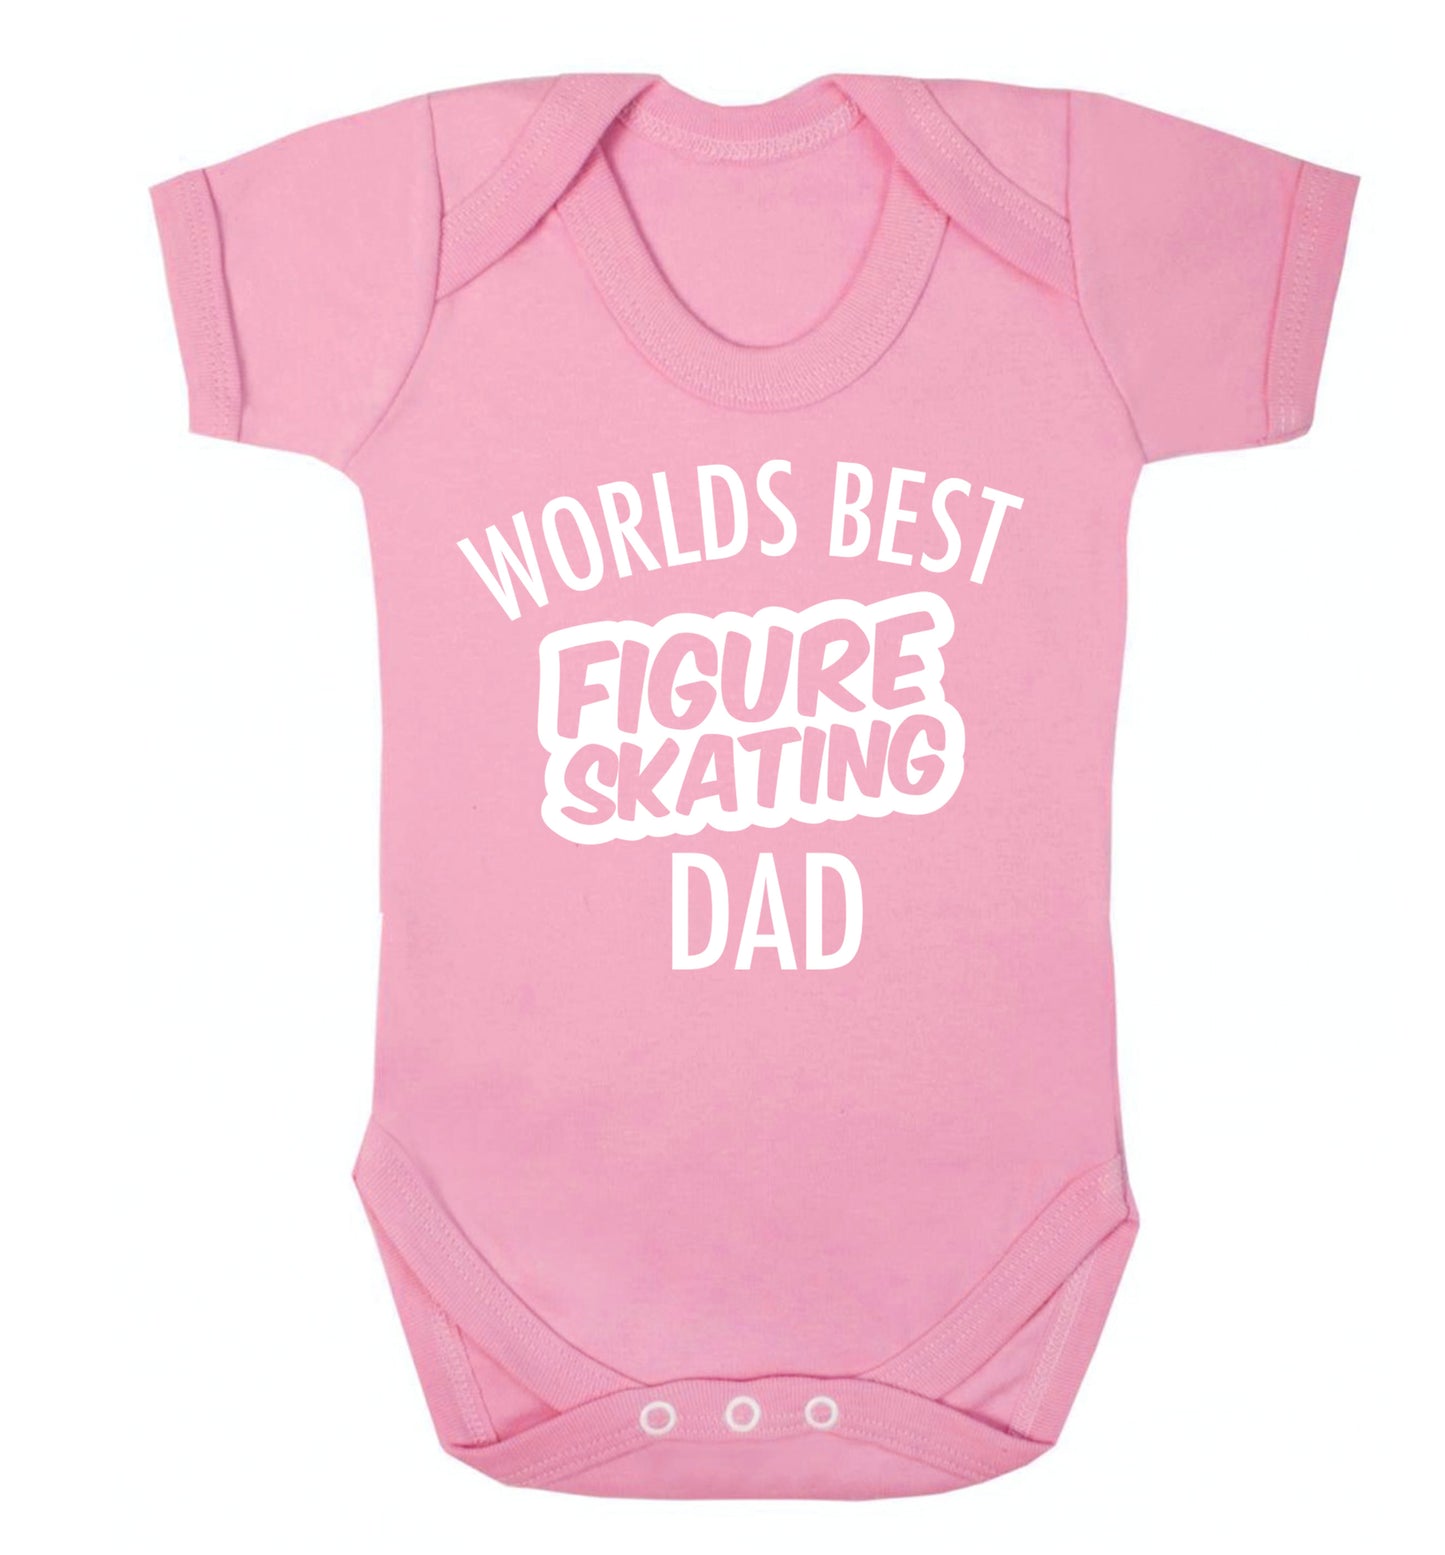 Worlds best figure skating dad Baby Vest pale pink 18-24 months